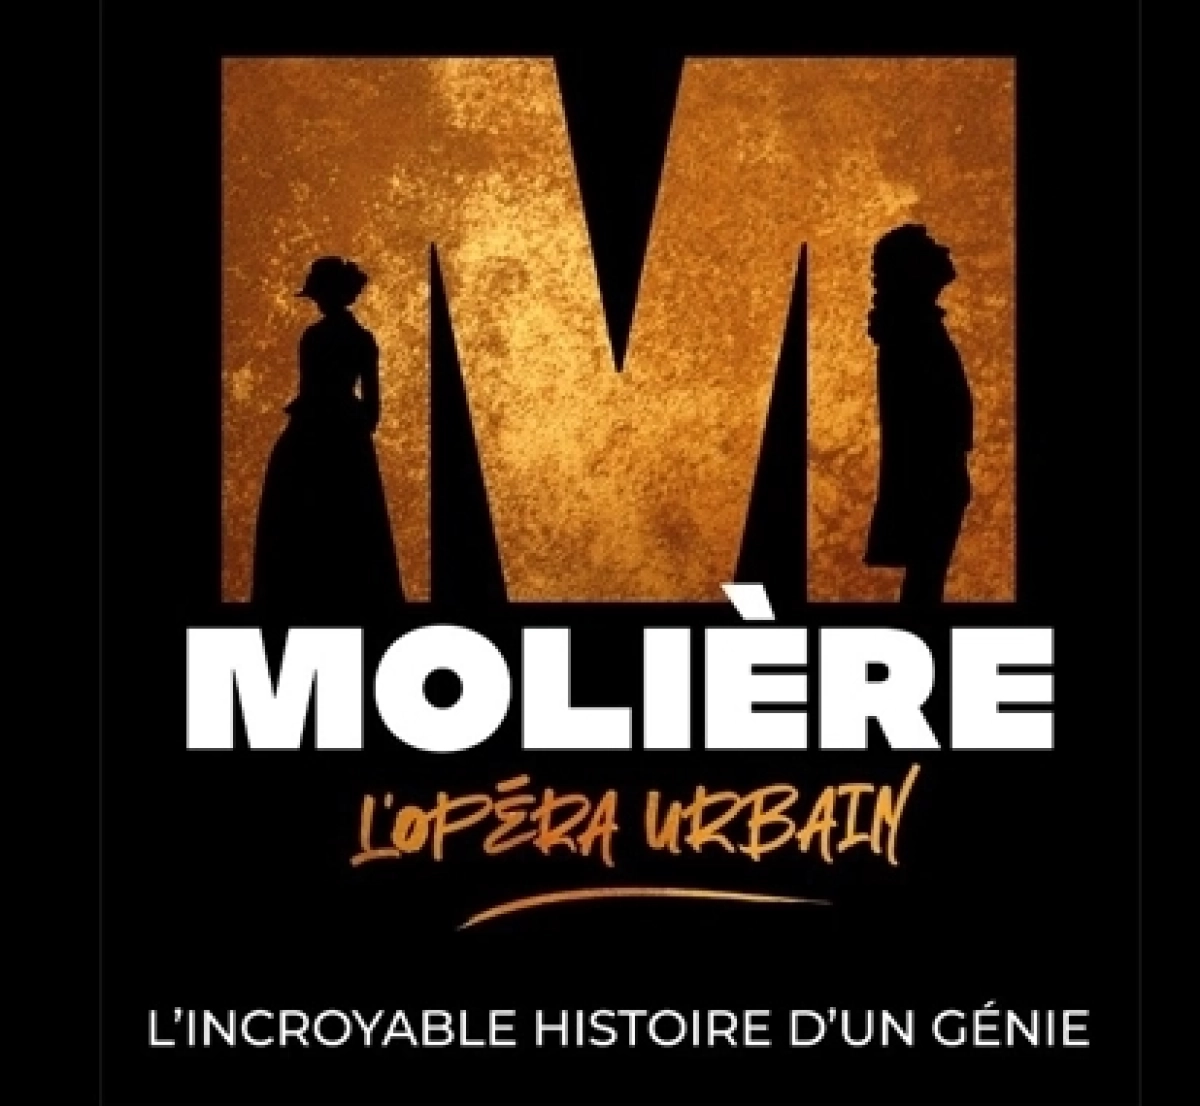 Billets Moliere L'opera Urbain (Arena Futuroscope - Chasseneuil Du Poitou)